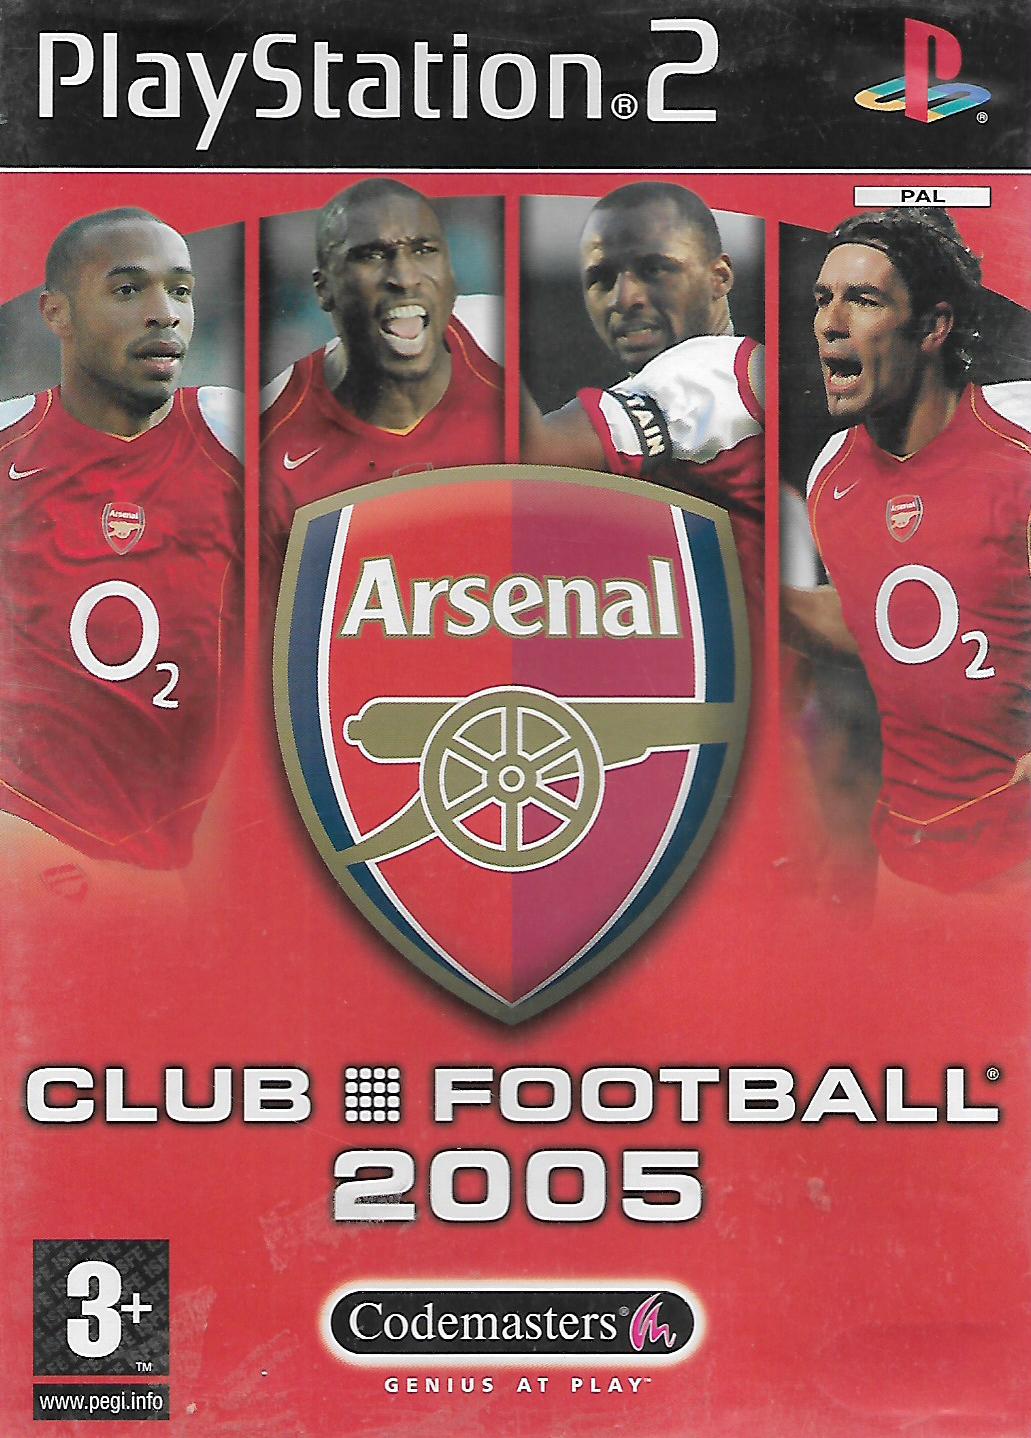 CLUB FOOTBALL 2005 - ARSENAL (PS2 - BAZAR)